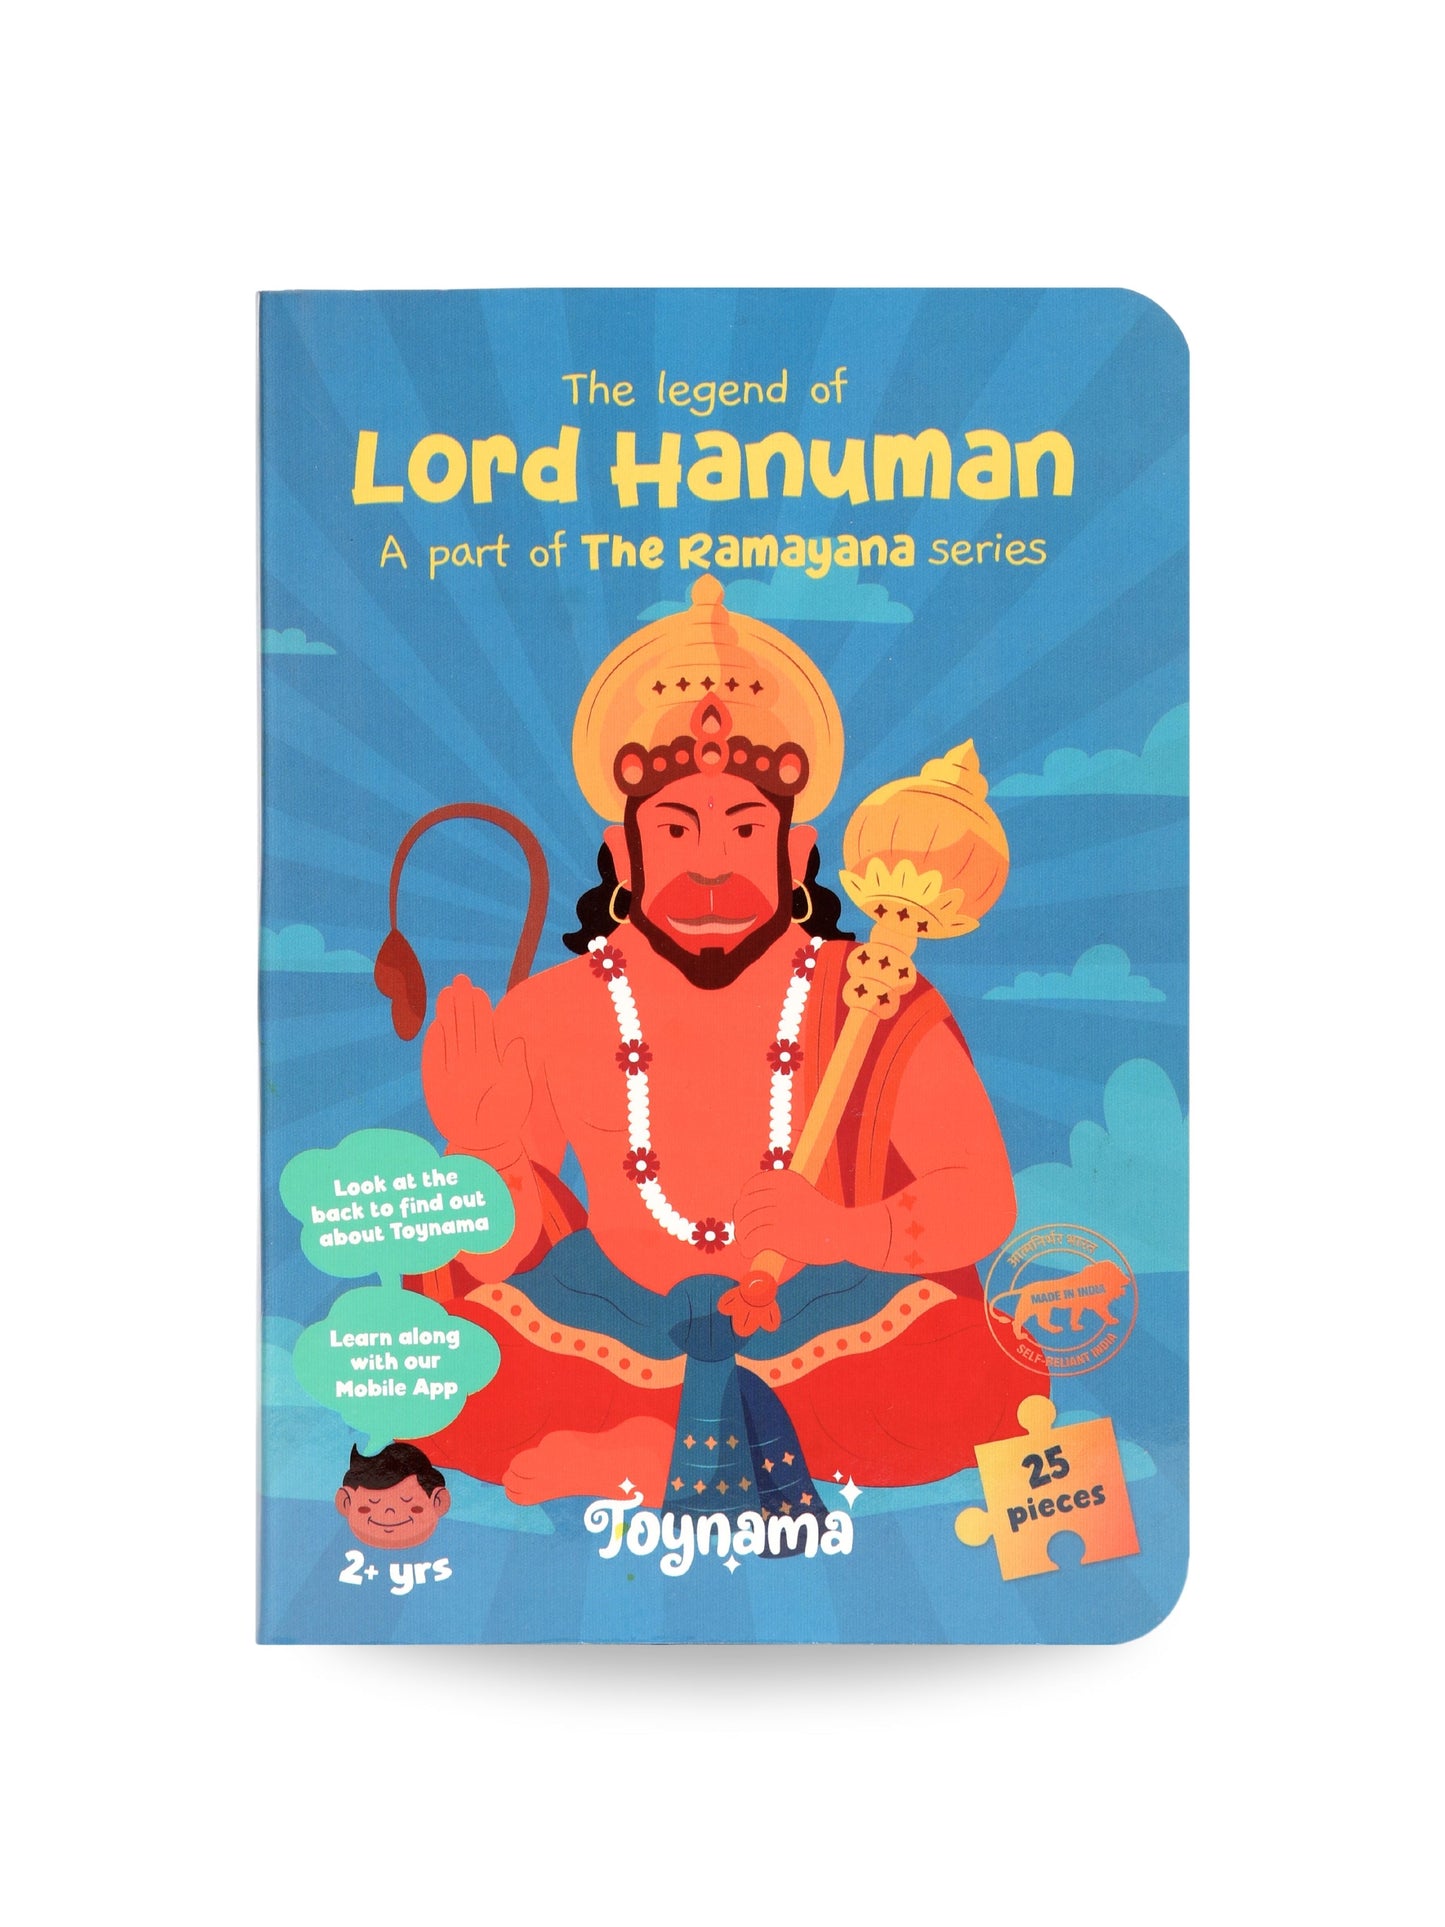 Hanuman 25 Pcs Jigsaw Puzzles Ages 2+